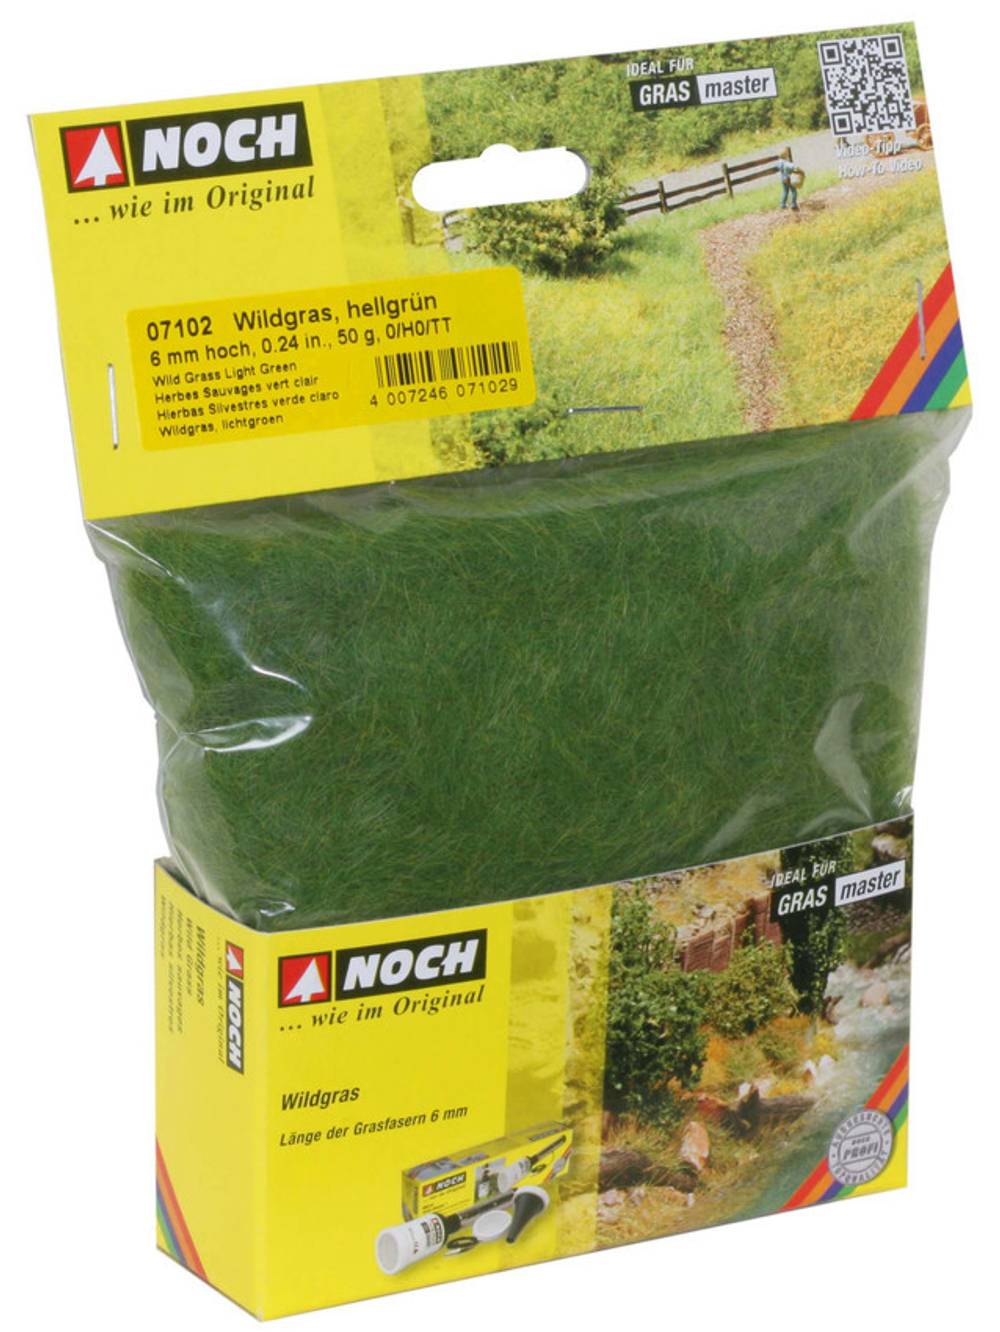 Дикая трава, светло-зелёная (6 мм)